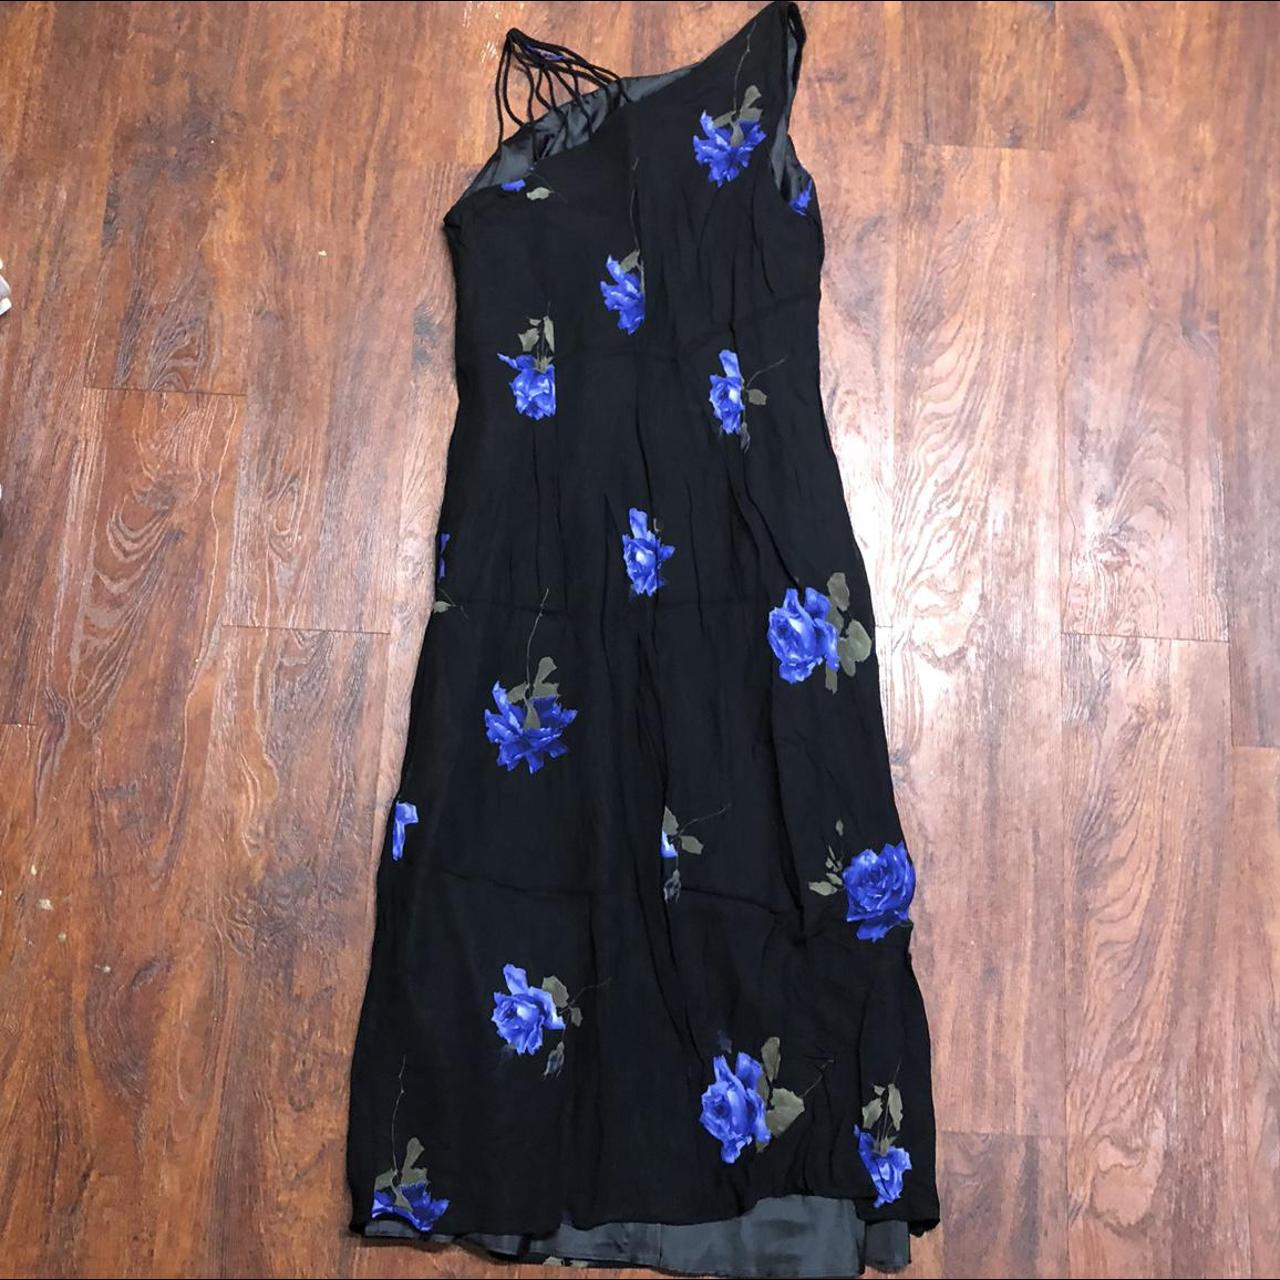 Blue Roses Women's Black and Blue Dress (4)